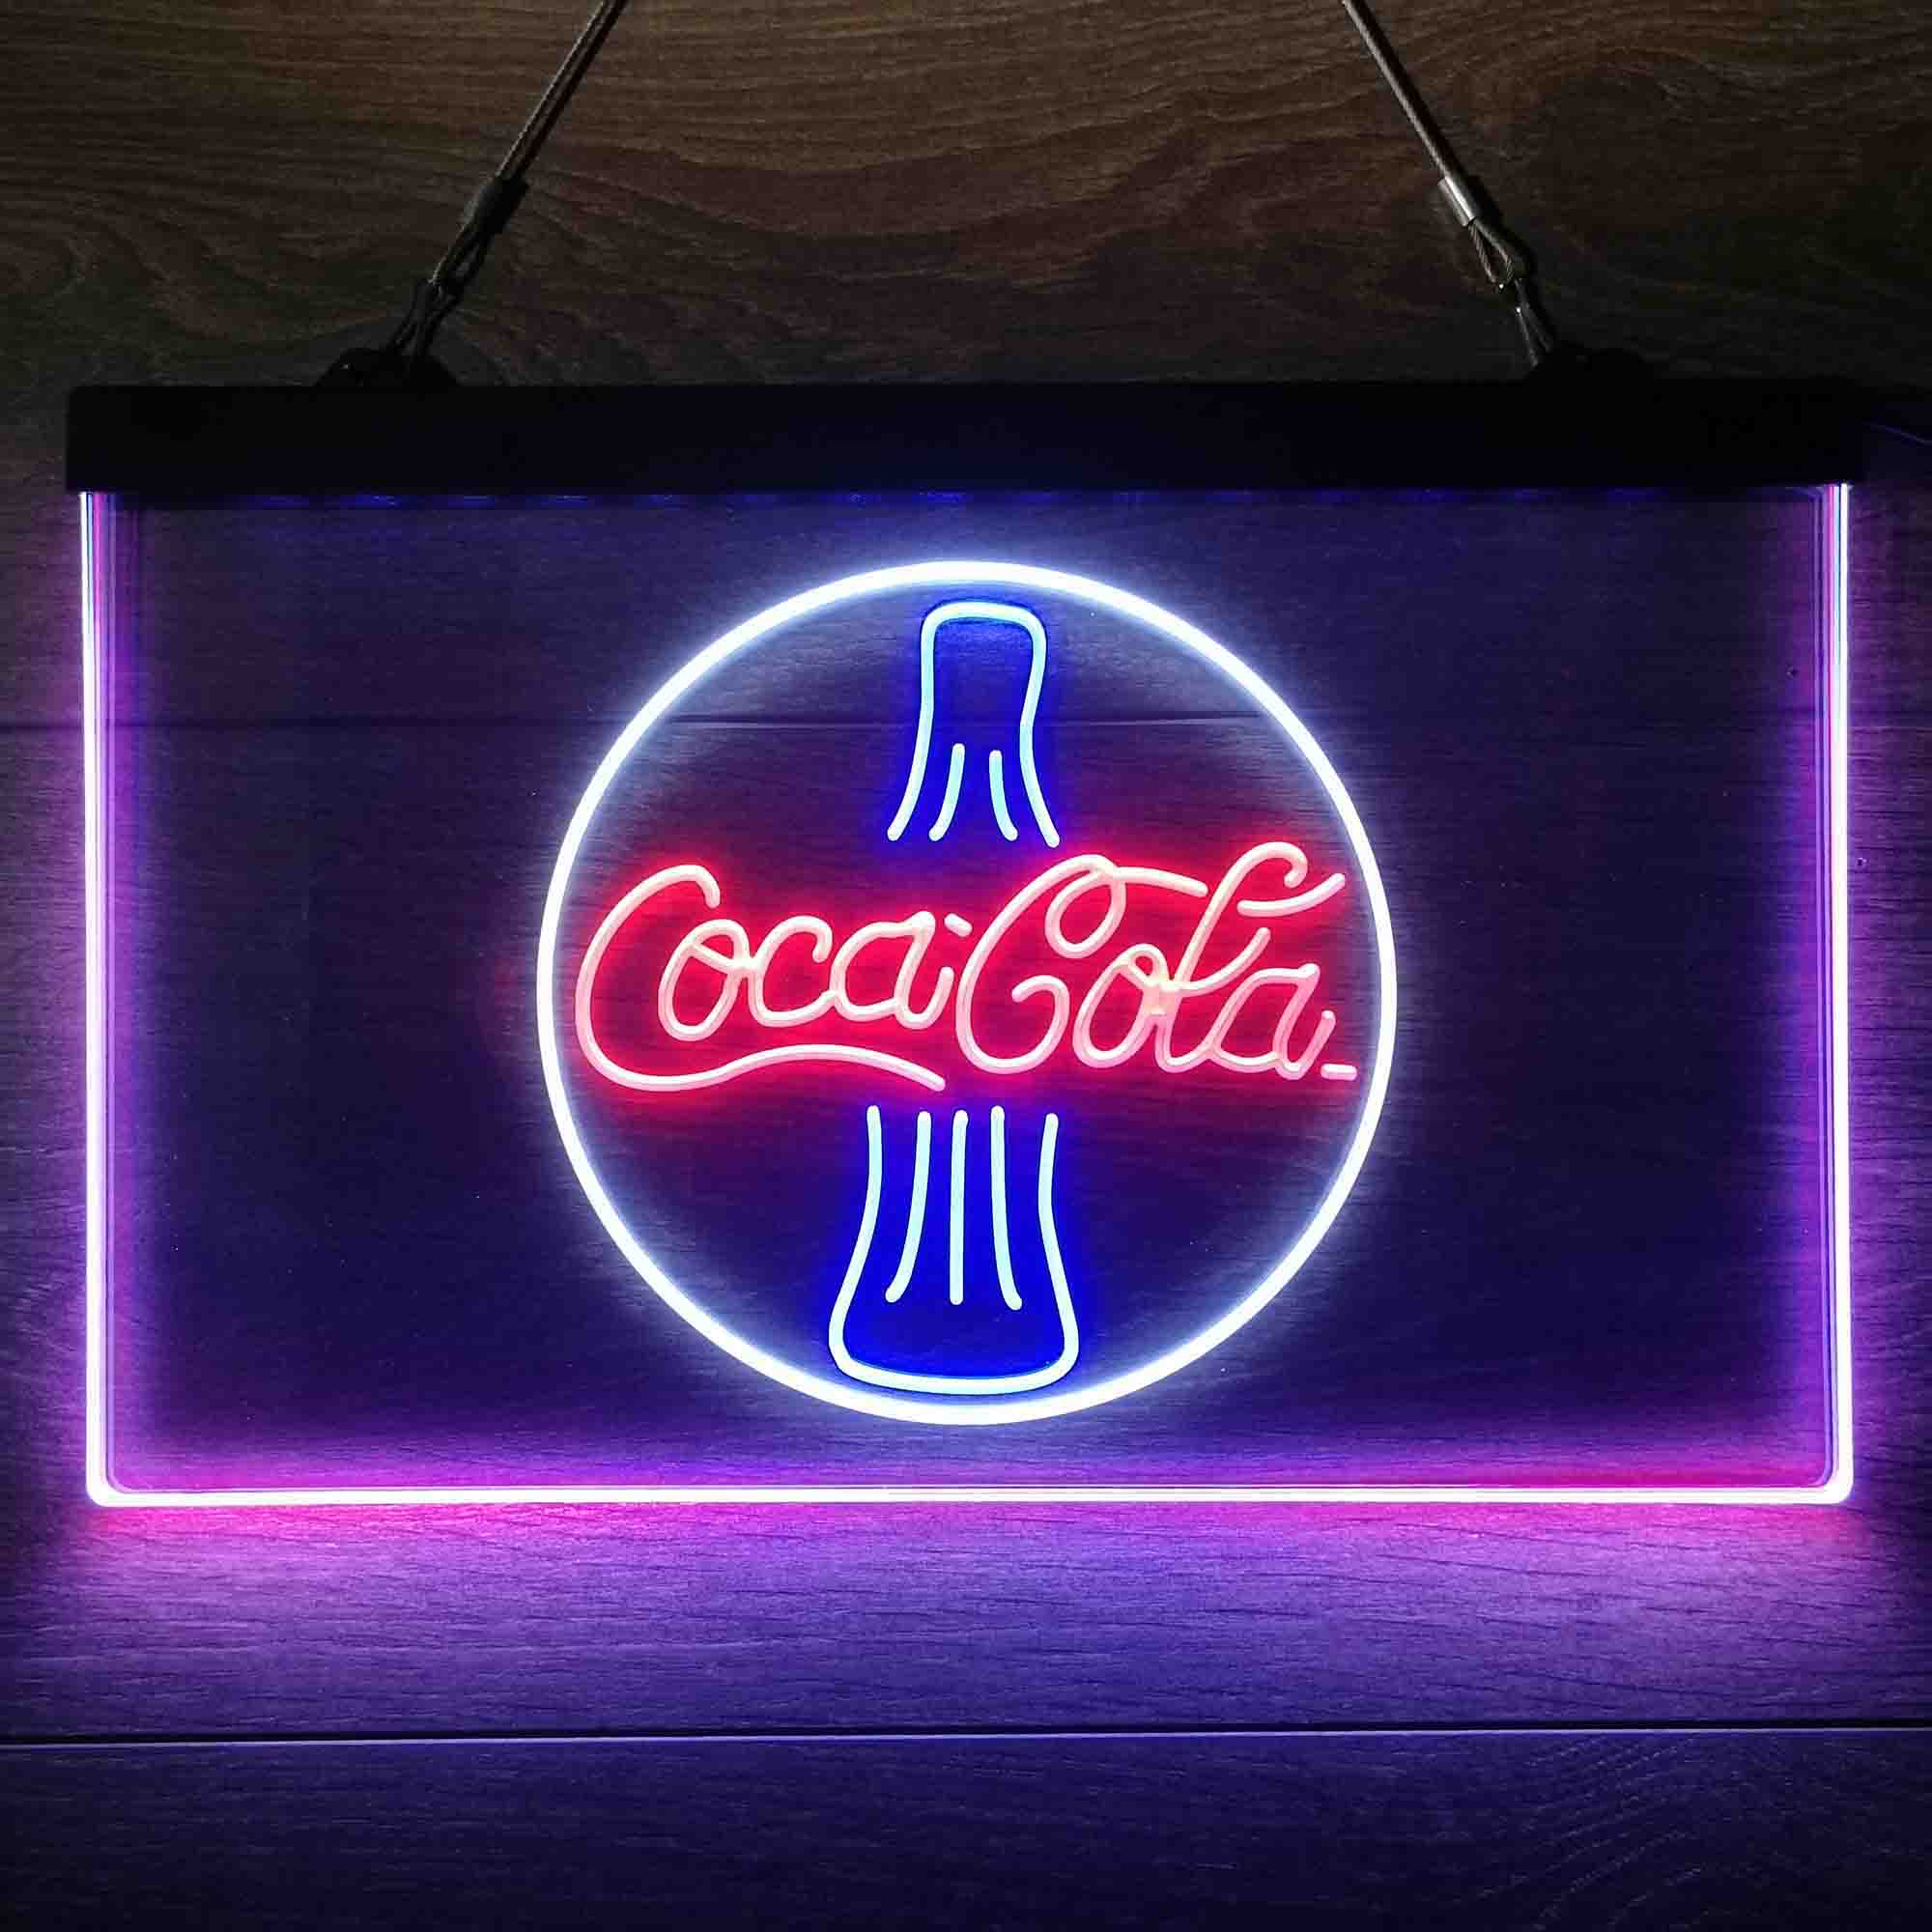 Coca Cola Coke Bottle Neon Light LED Sign